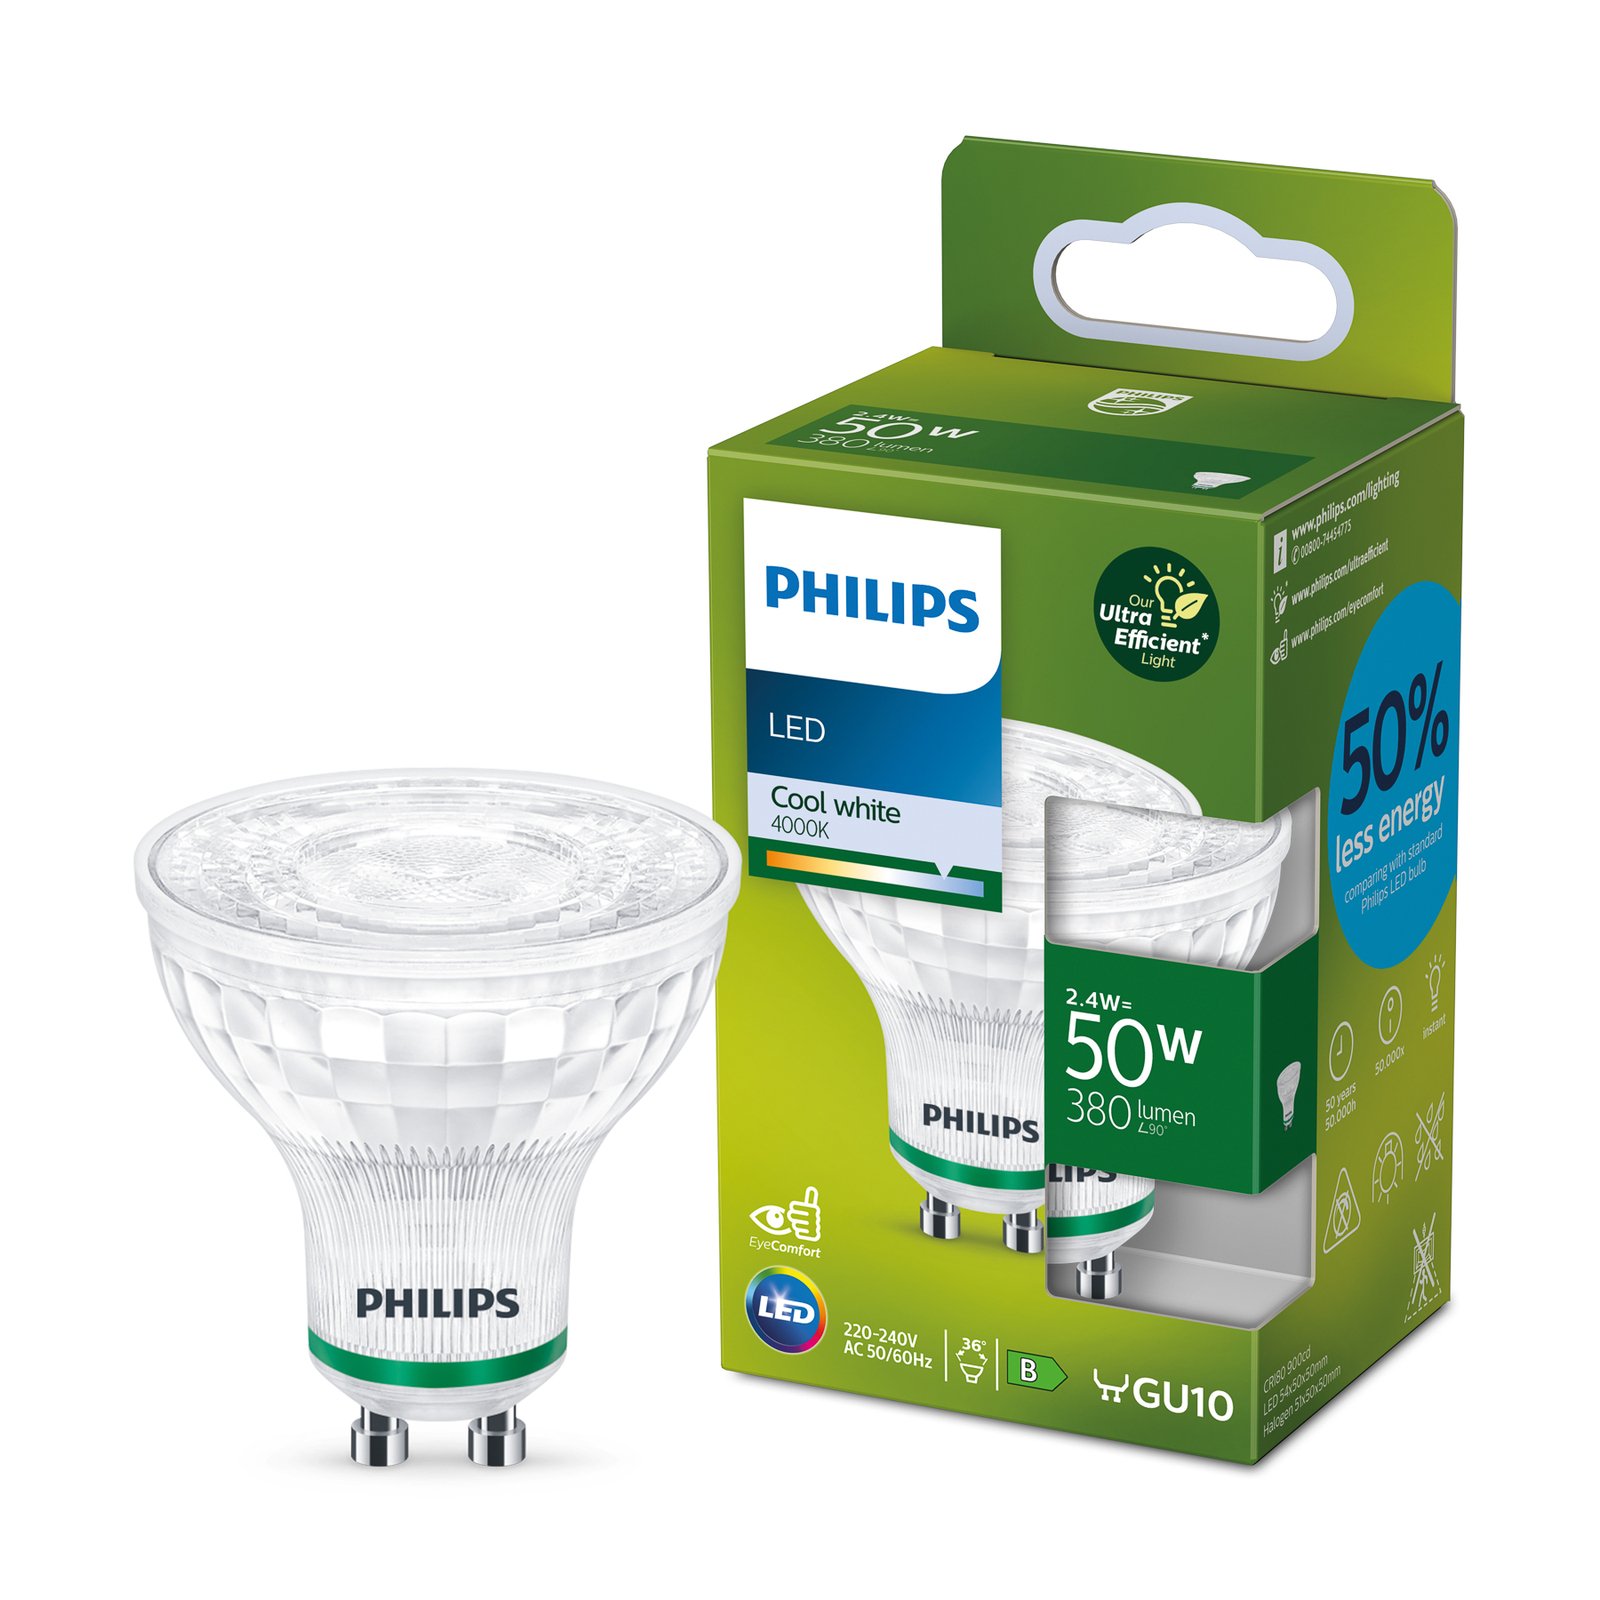 Philips reflector LED bulb GU10 2.4 W 36° 4,000 K